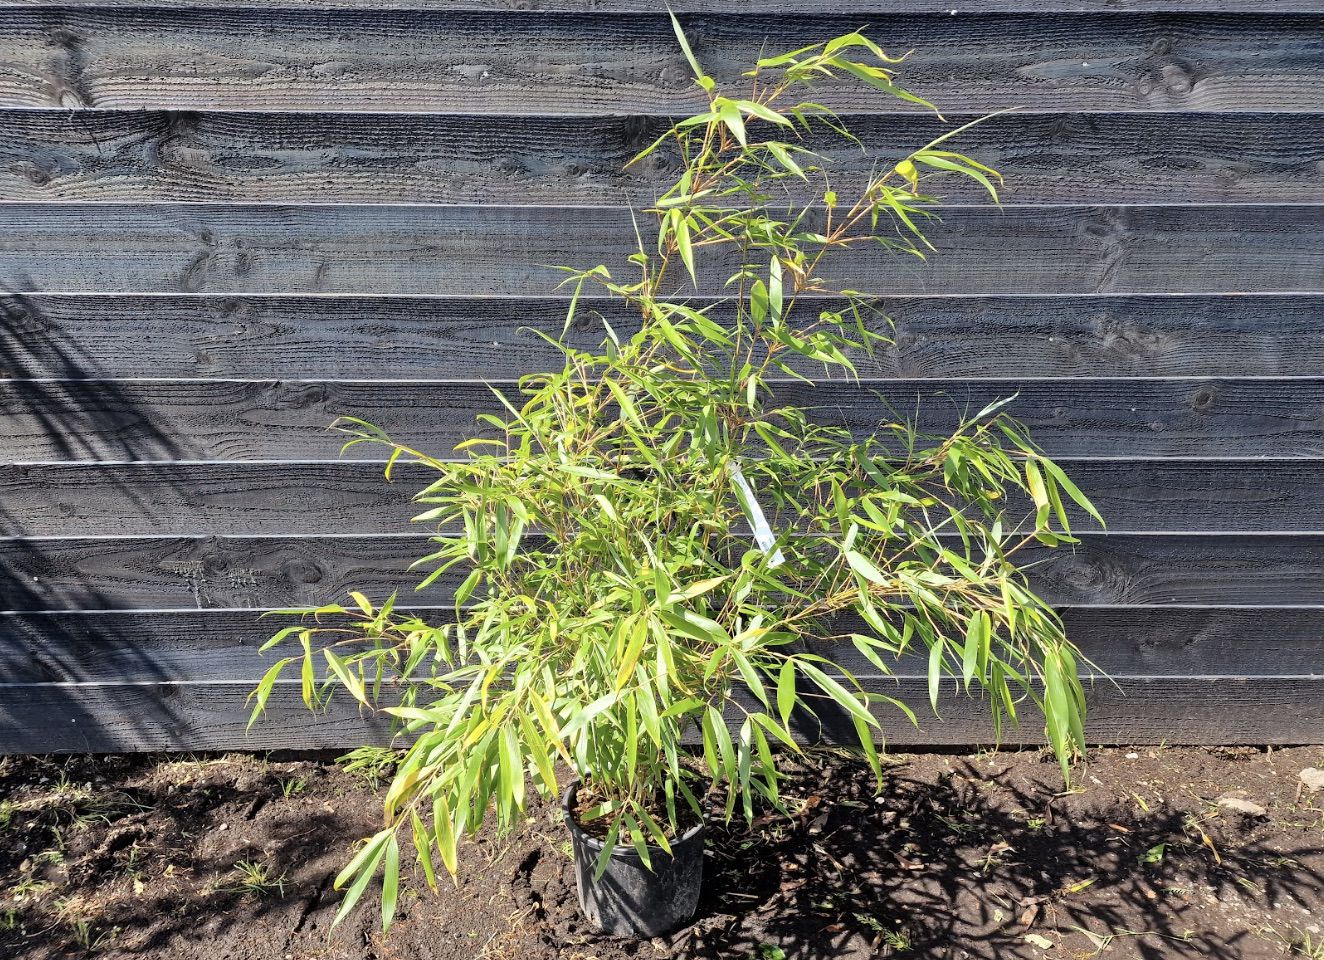 Haagplant bamboe 'Ping wu'